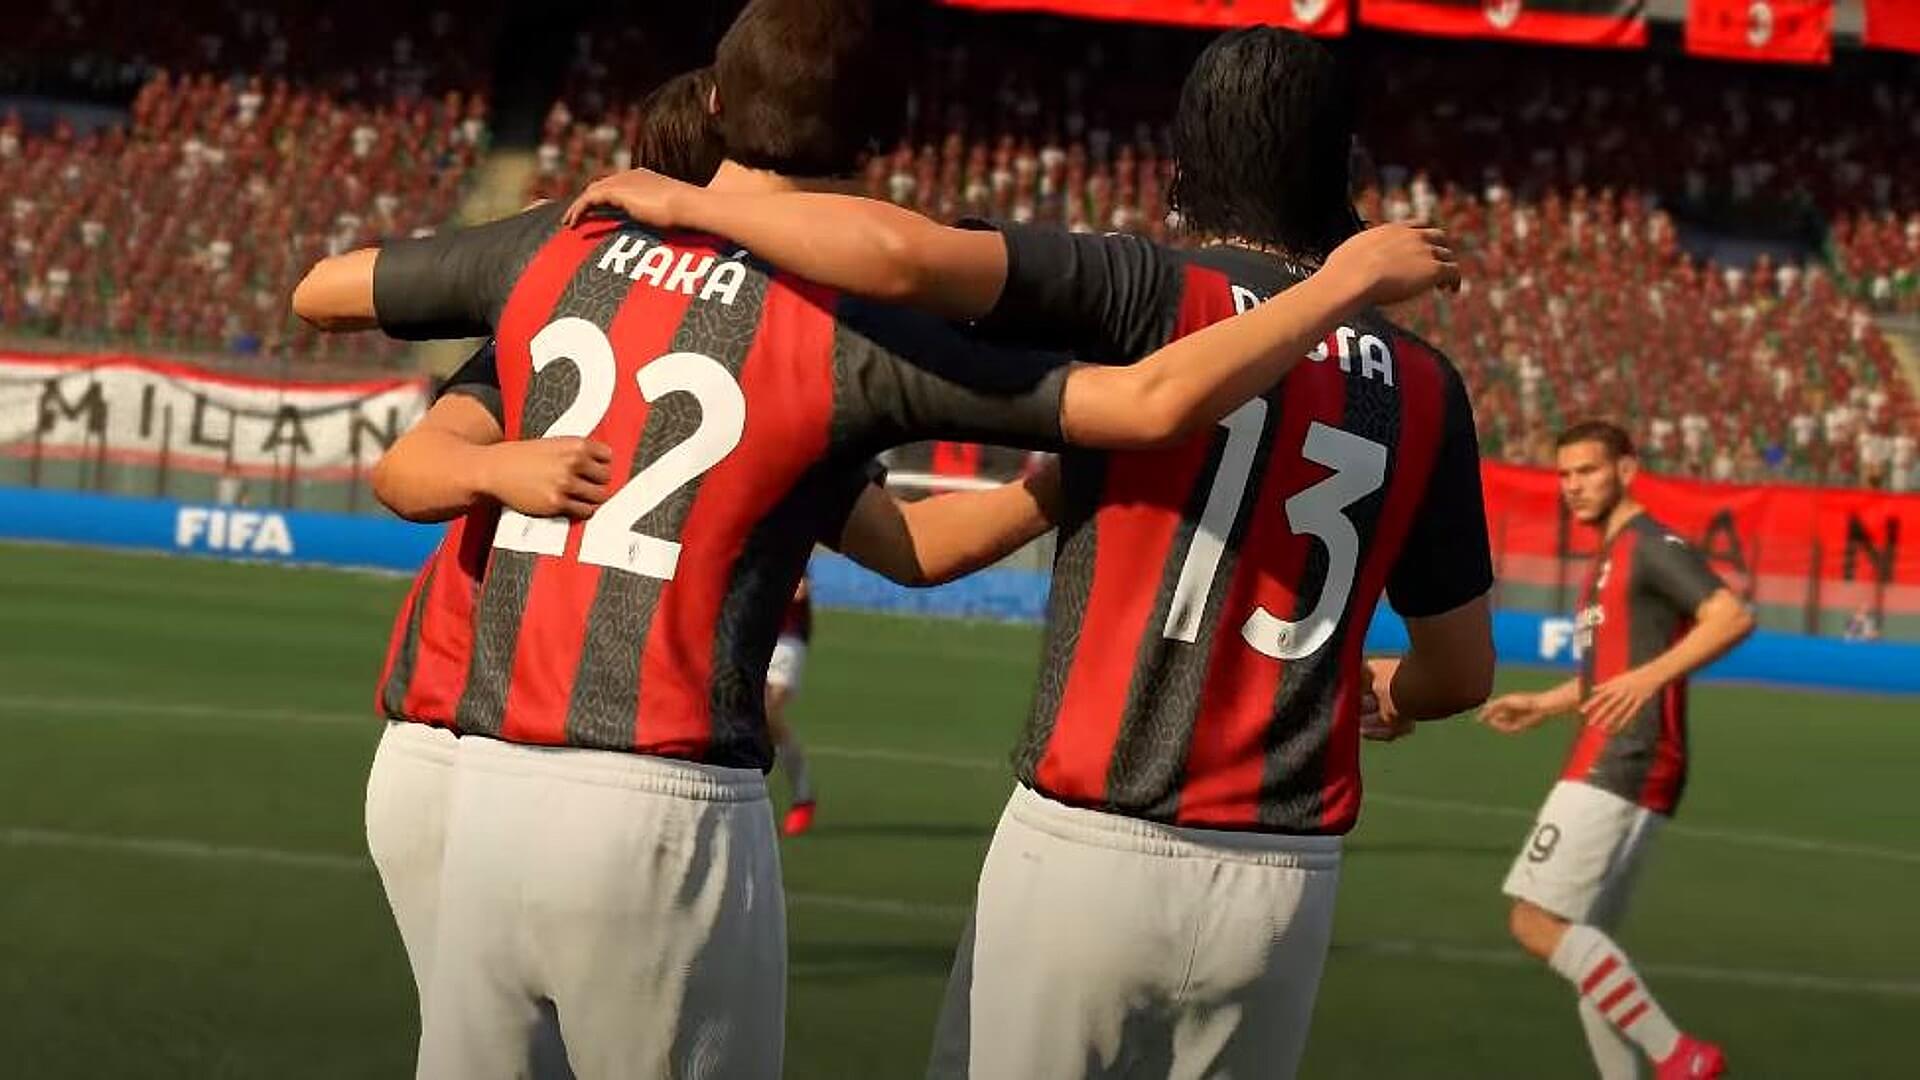 Tiga orang pemain sepak bola tengah merangkul satu sama lain di lapangan hijau dalam game FIFA 21